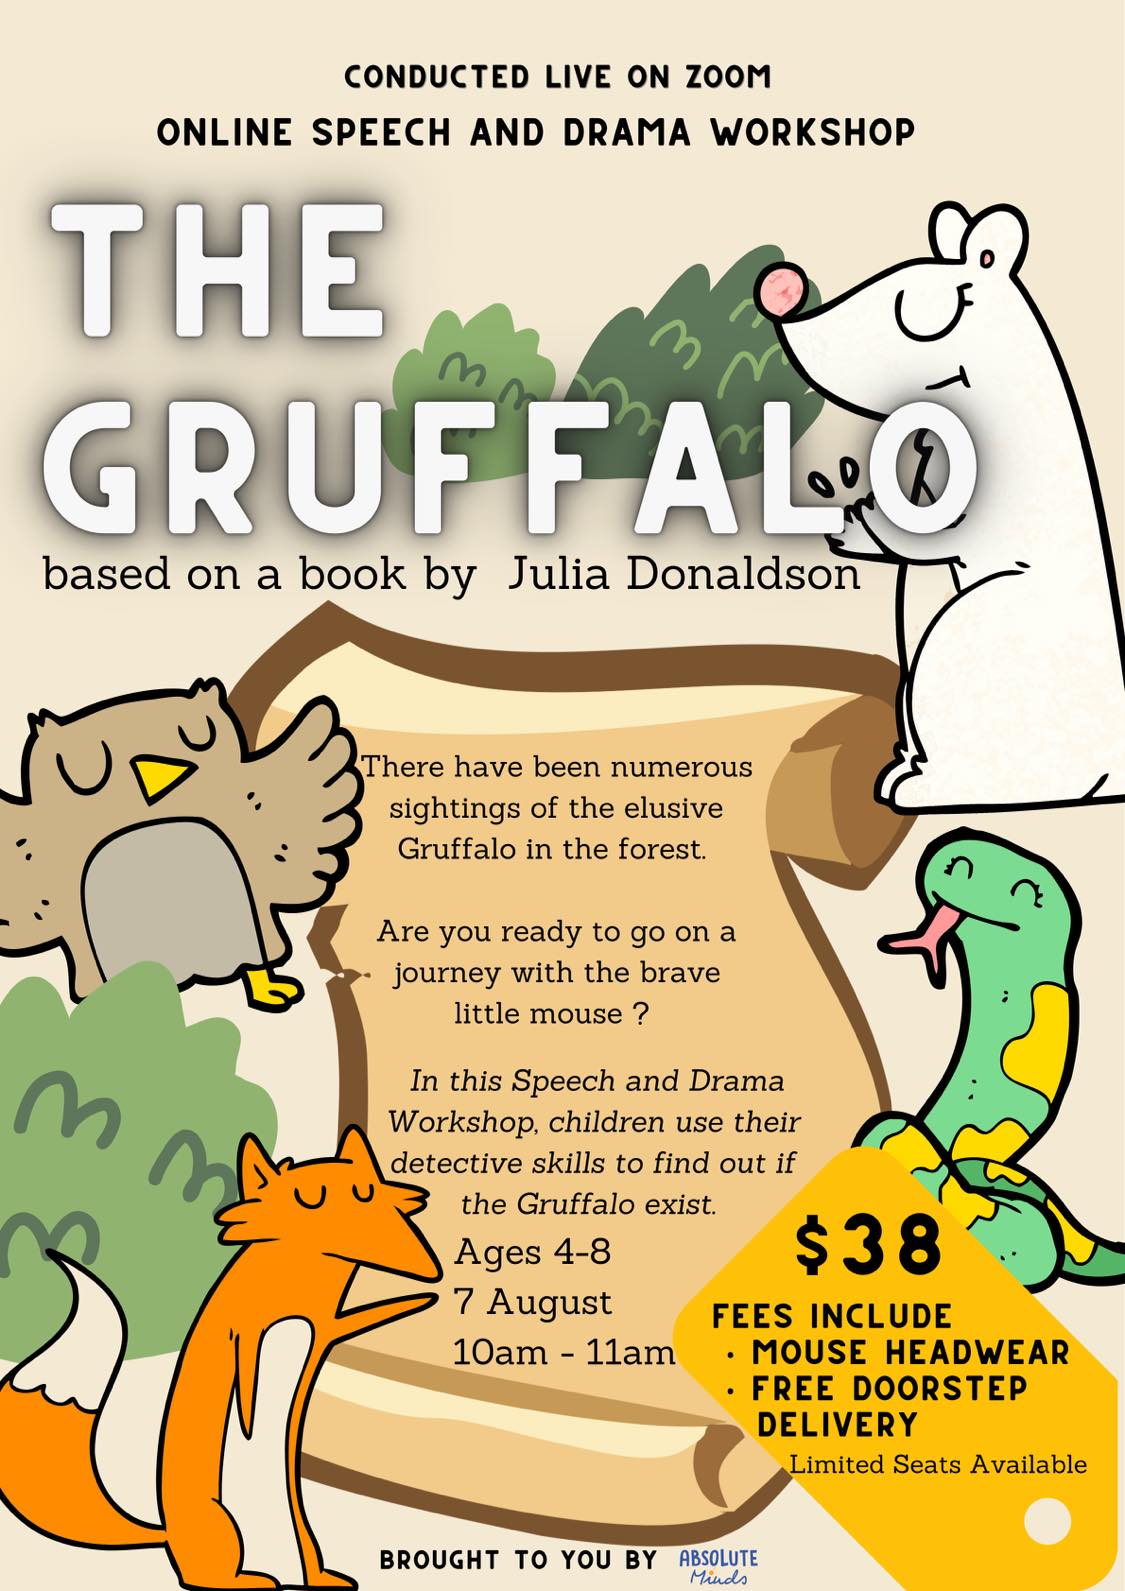 The speech and drama Gruffalo workshop